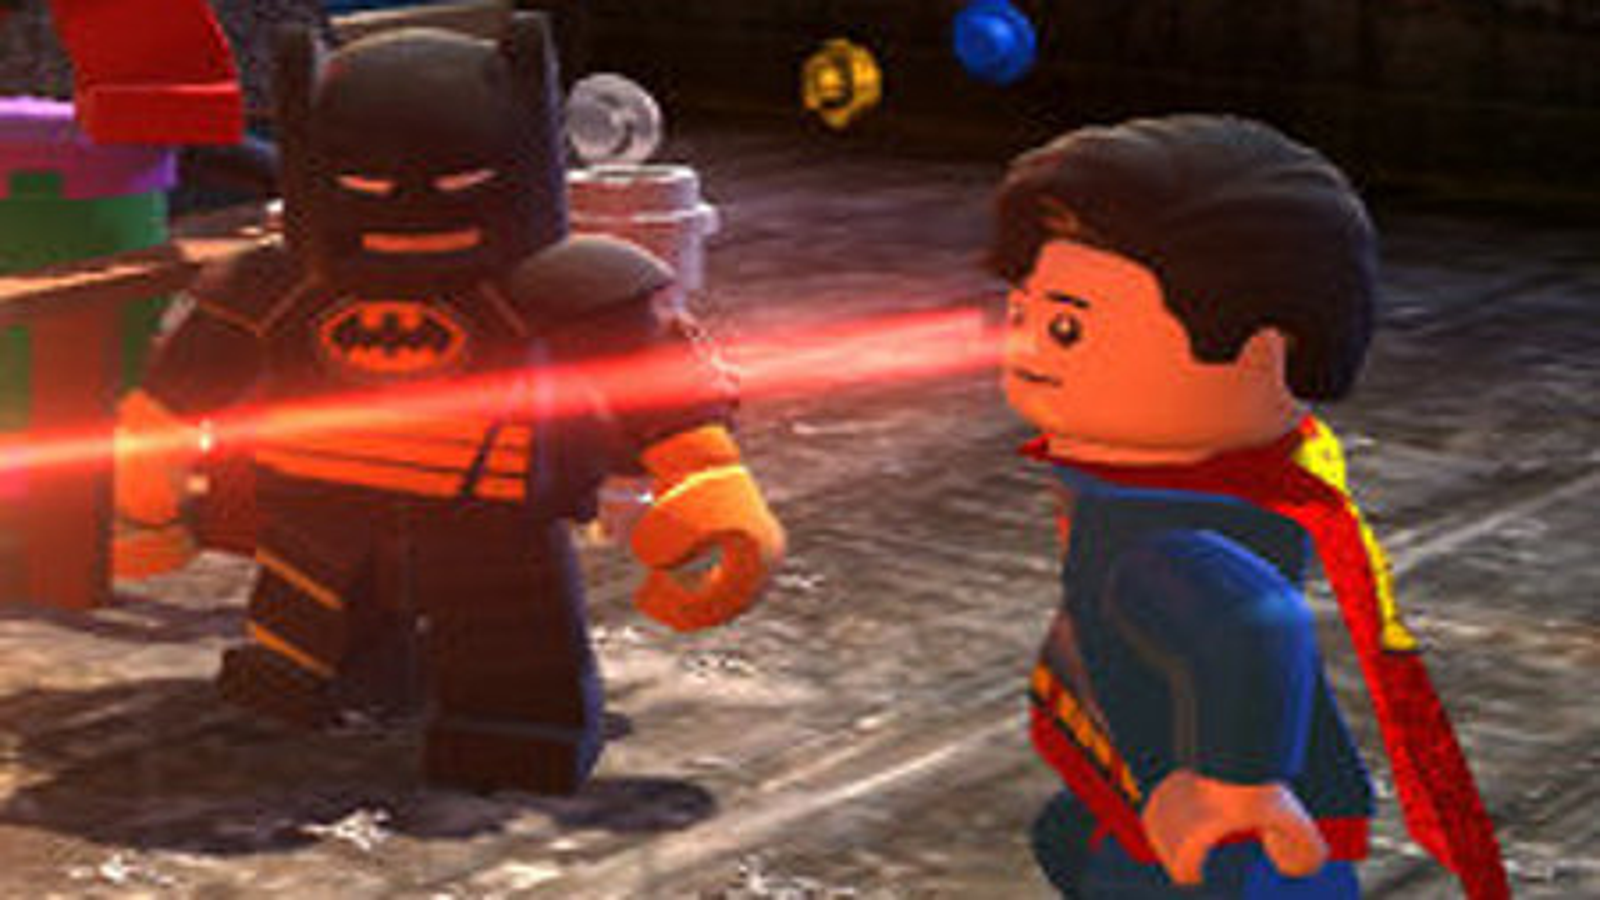 LEGO Batman 2: DC Super Heroes Steam Gift